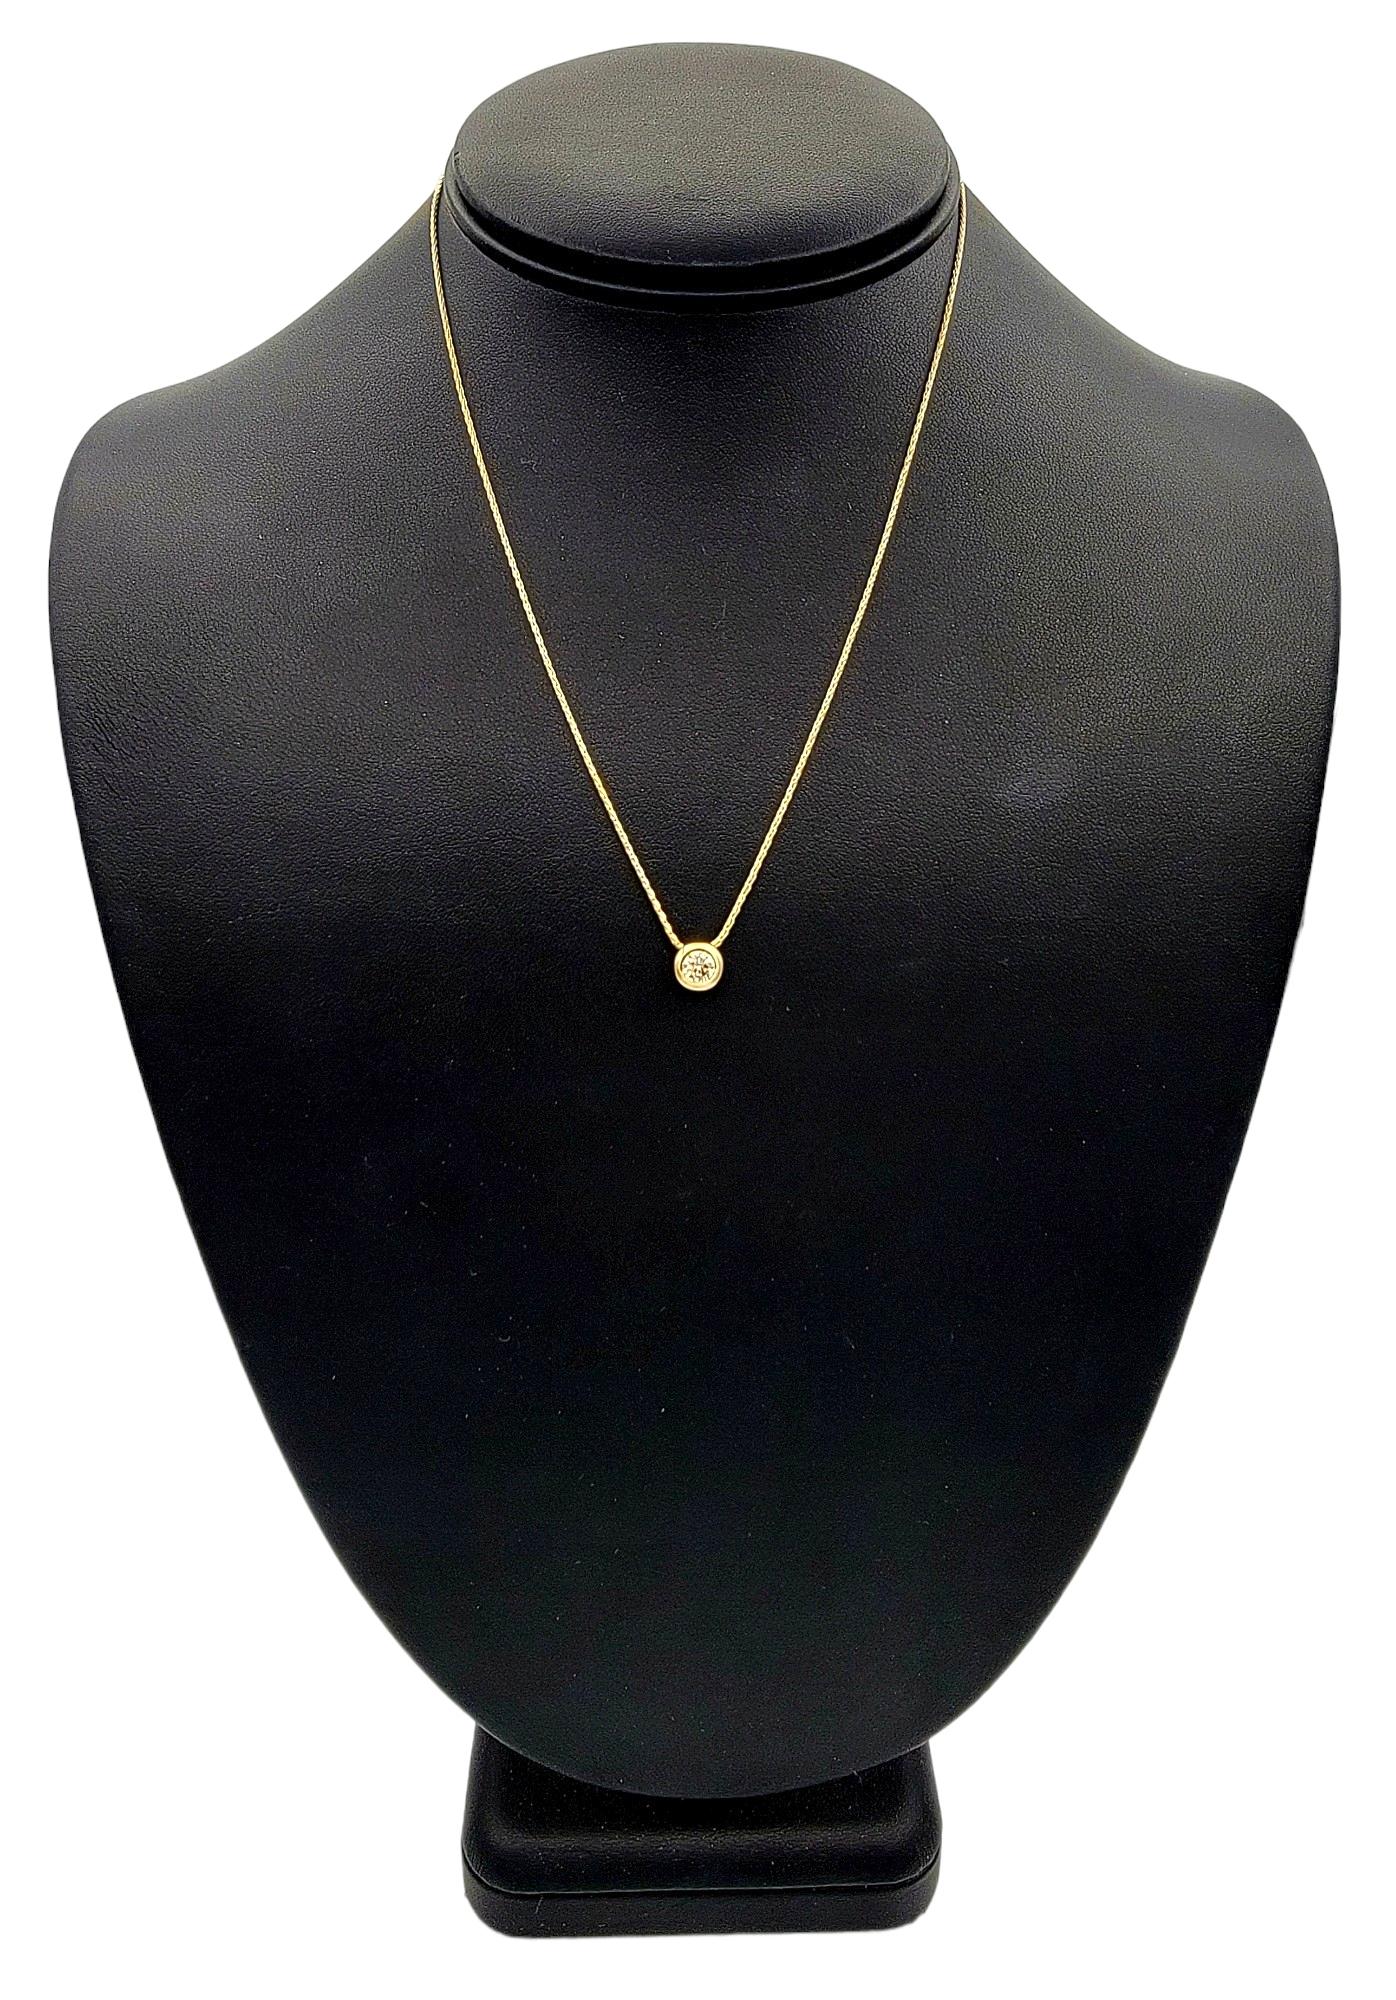 Round Diamond Bezel Solitaire Pendant Necklace in 14 Karat Yellow Gold 16.25